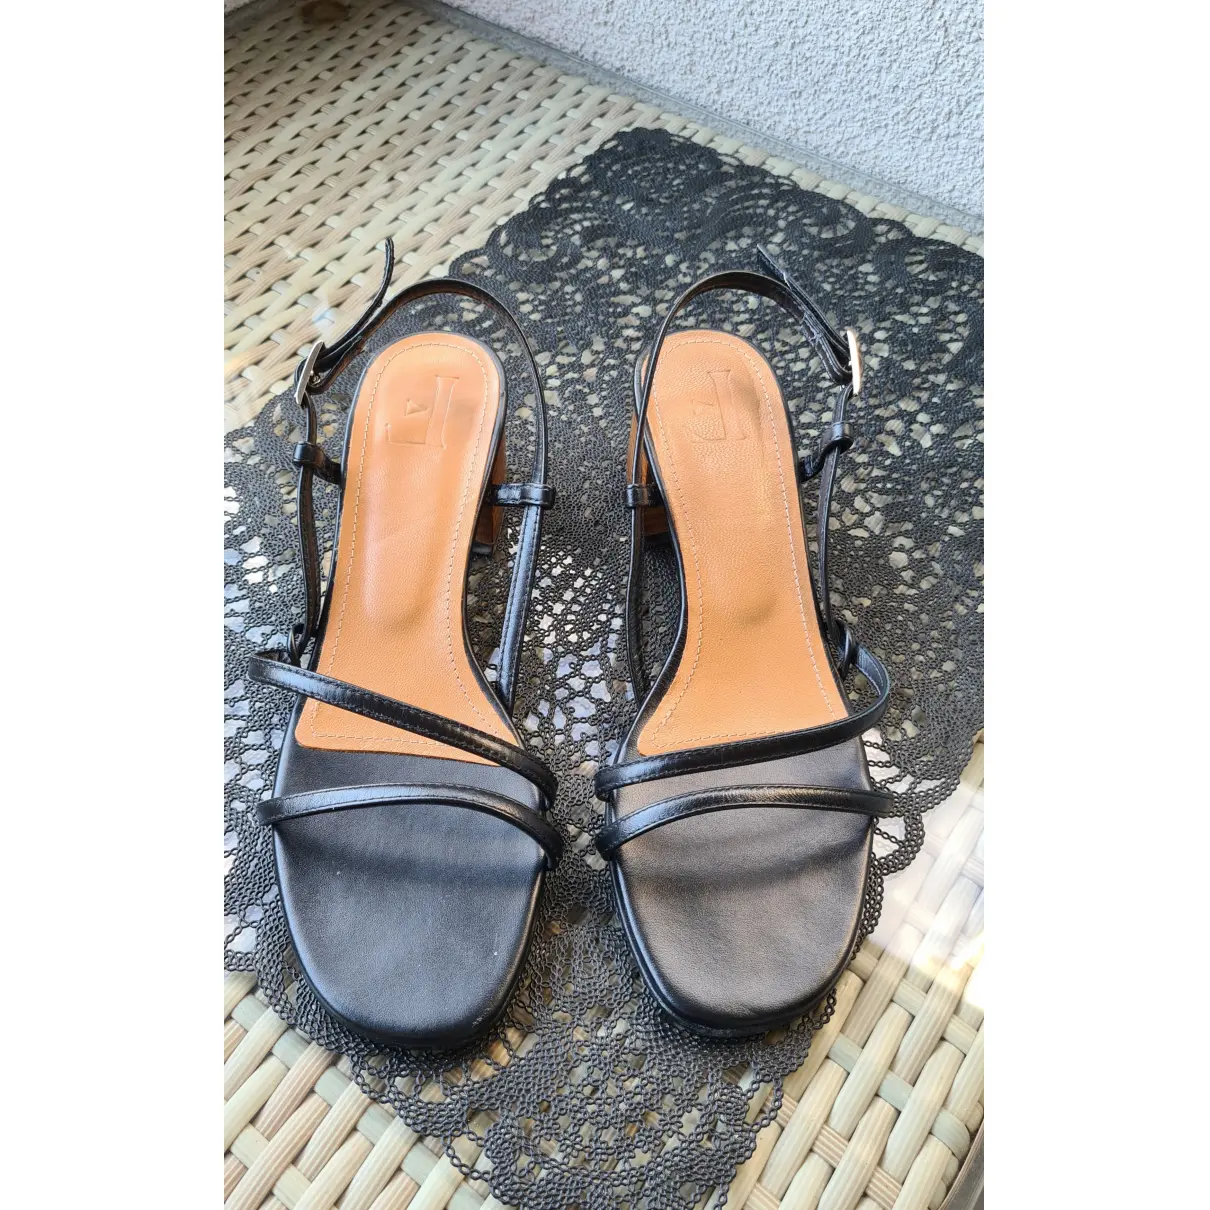 Buy Flattered Leather sandal online